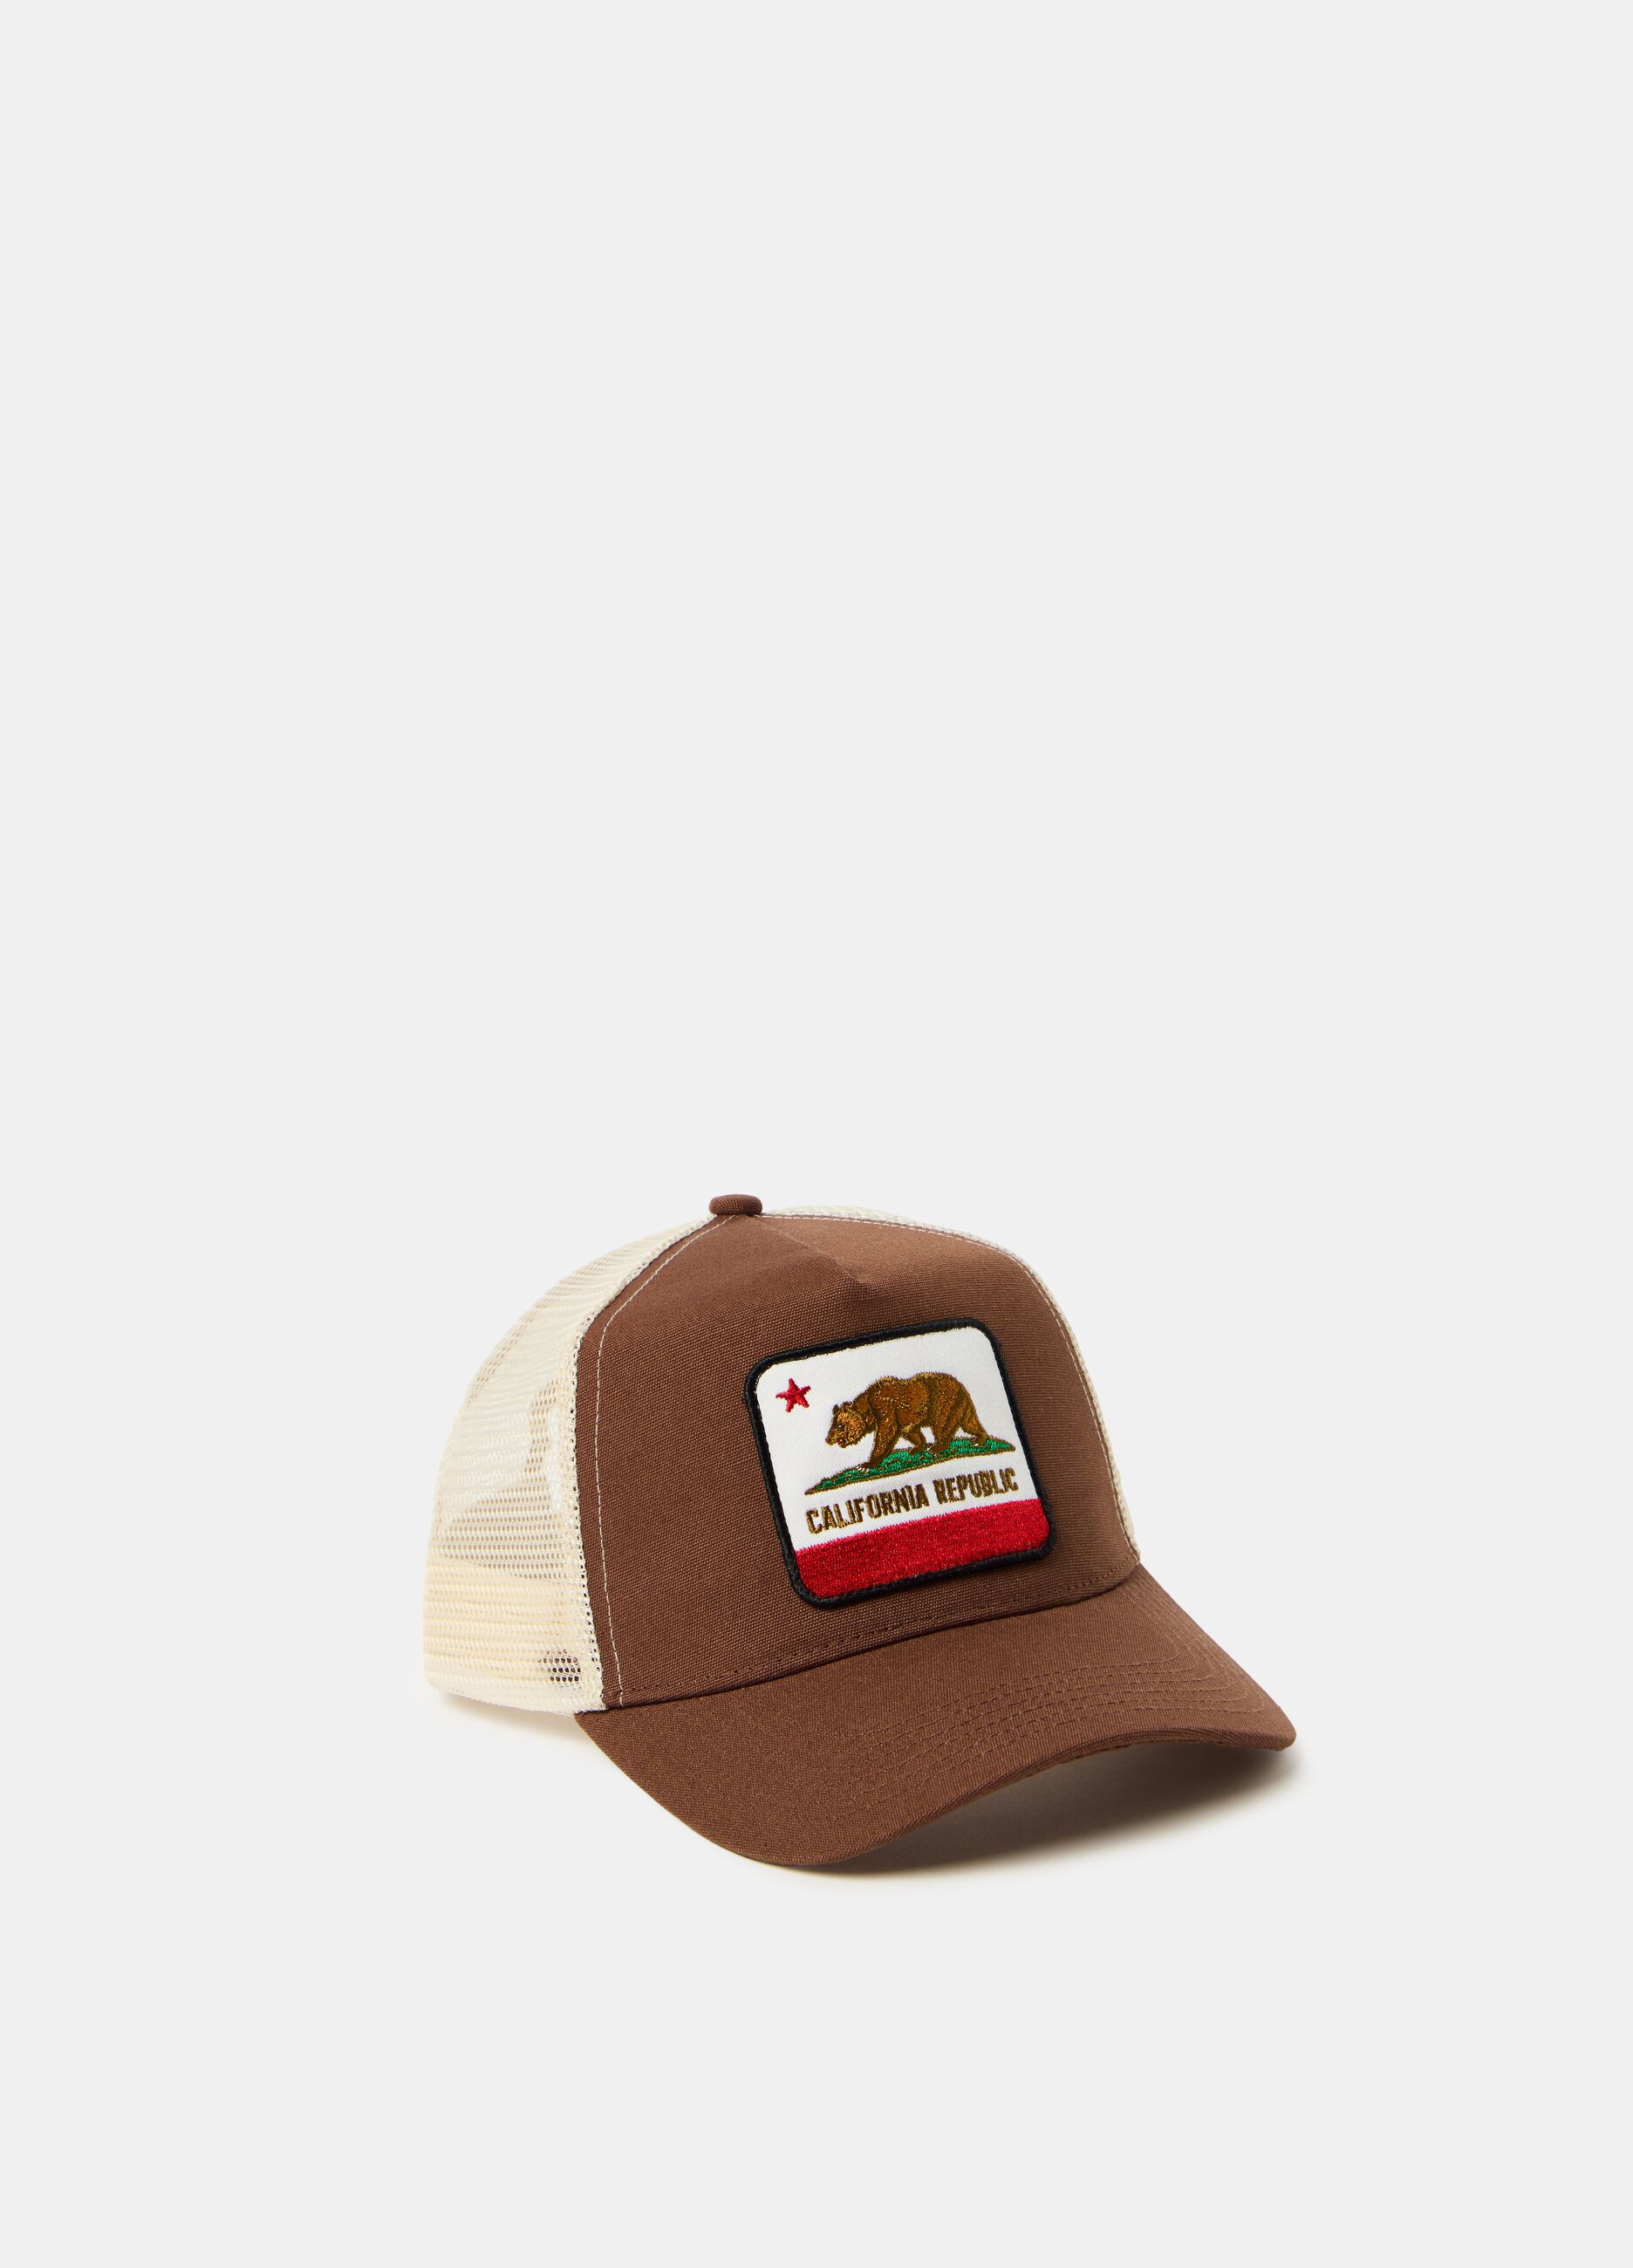 Baseball cap with Californian flag